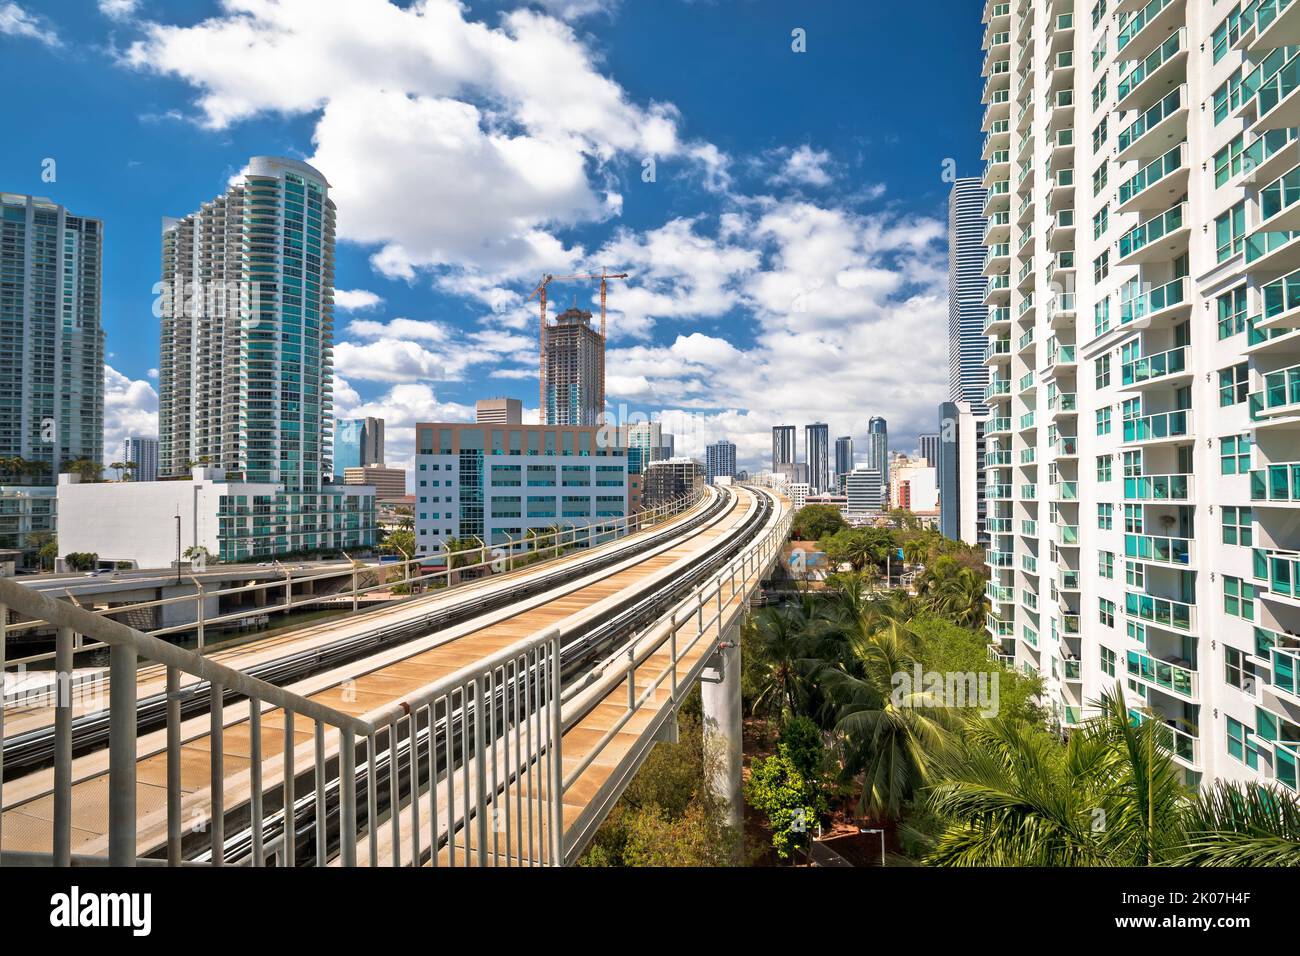 Miami downtown skyline and futuristic mover train view, Florida state, United States of America Stock Photo